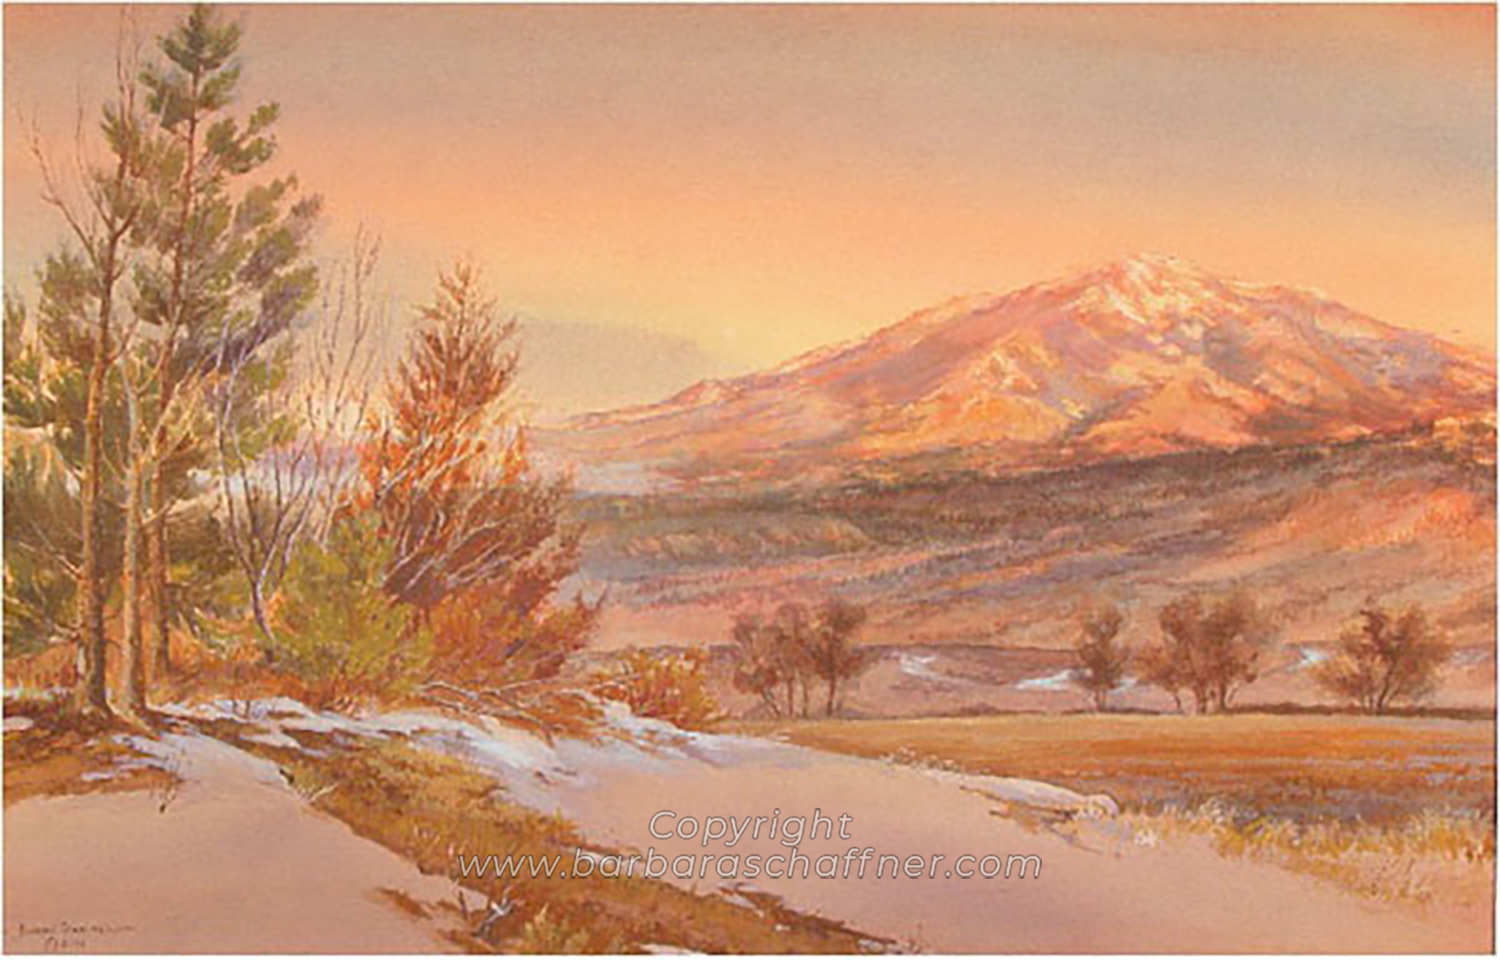 Laramie Peak at Sunrise by Barbara Schaffner (barbaraschaffner.com)